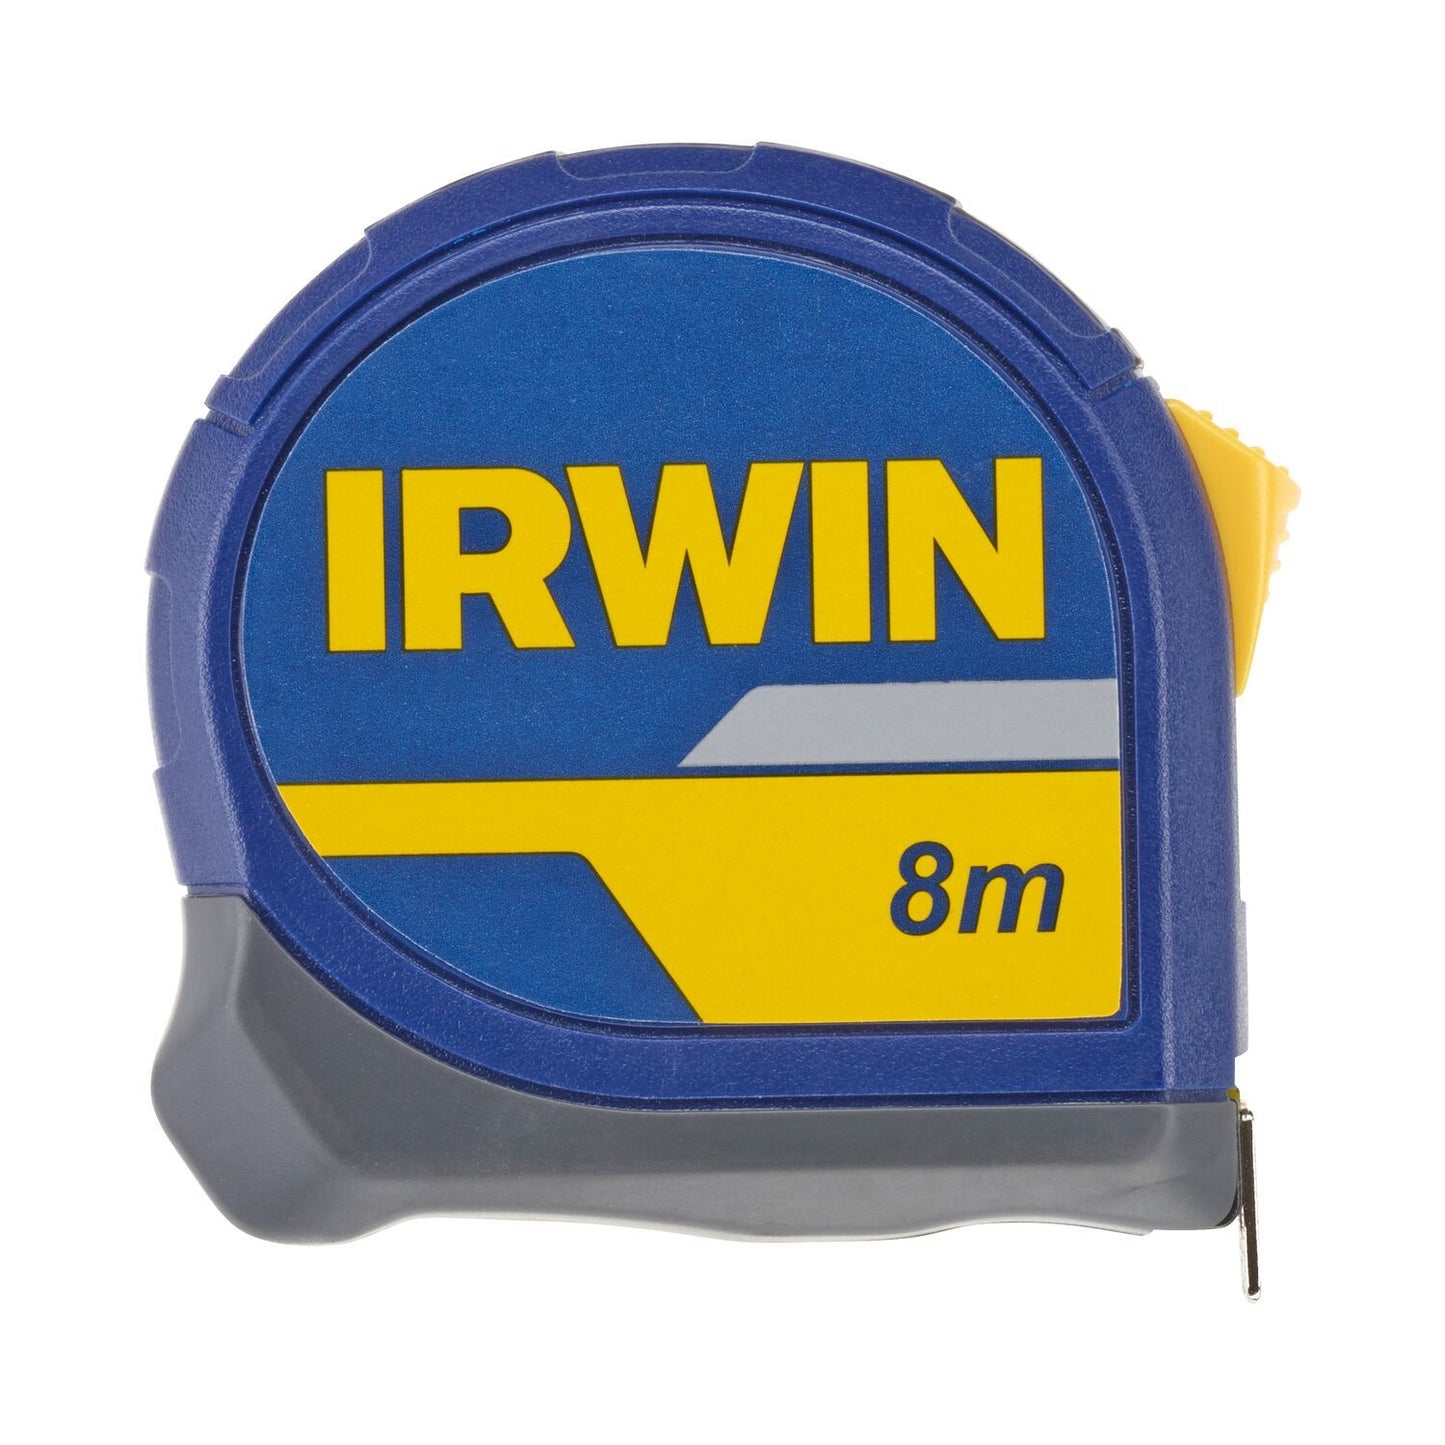 Irwin Standaard 8 m rolmeter - 10507786